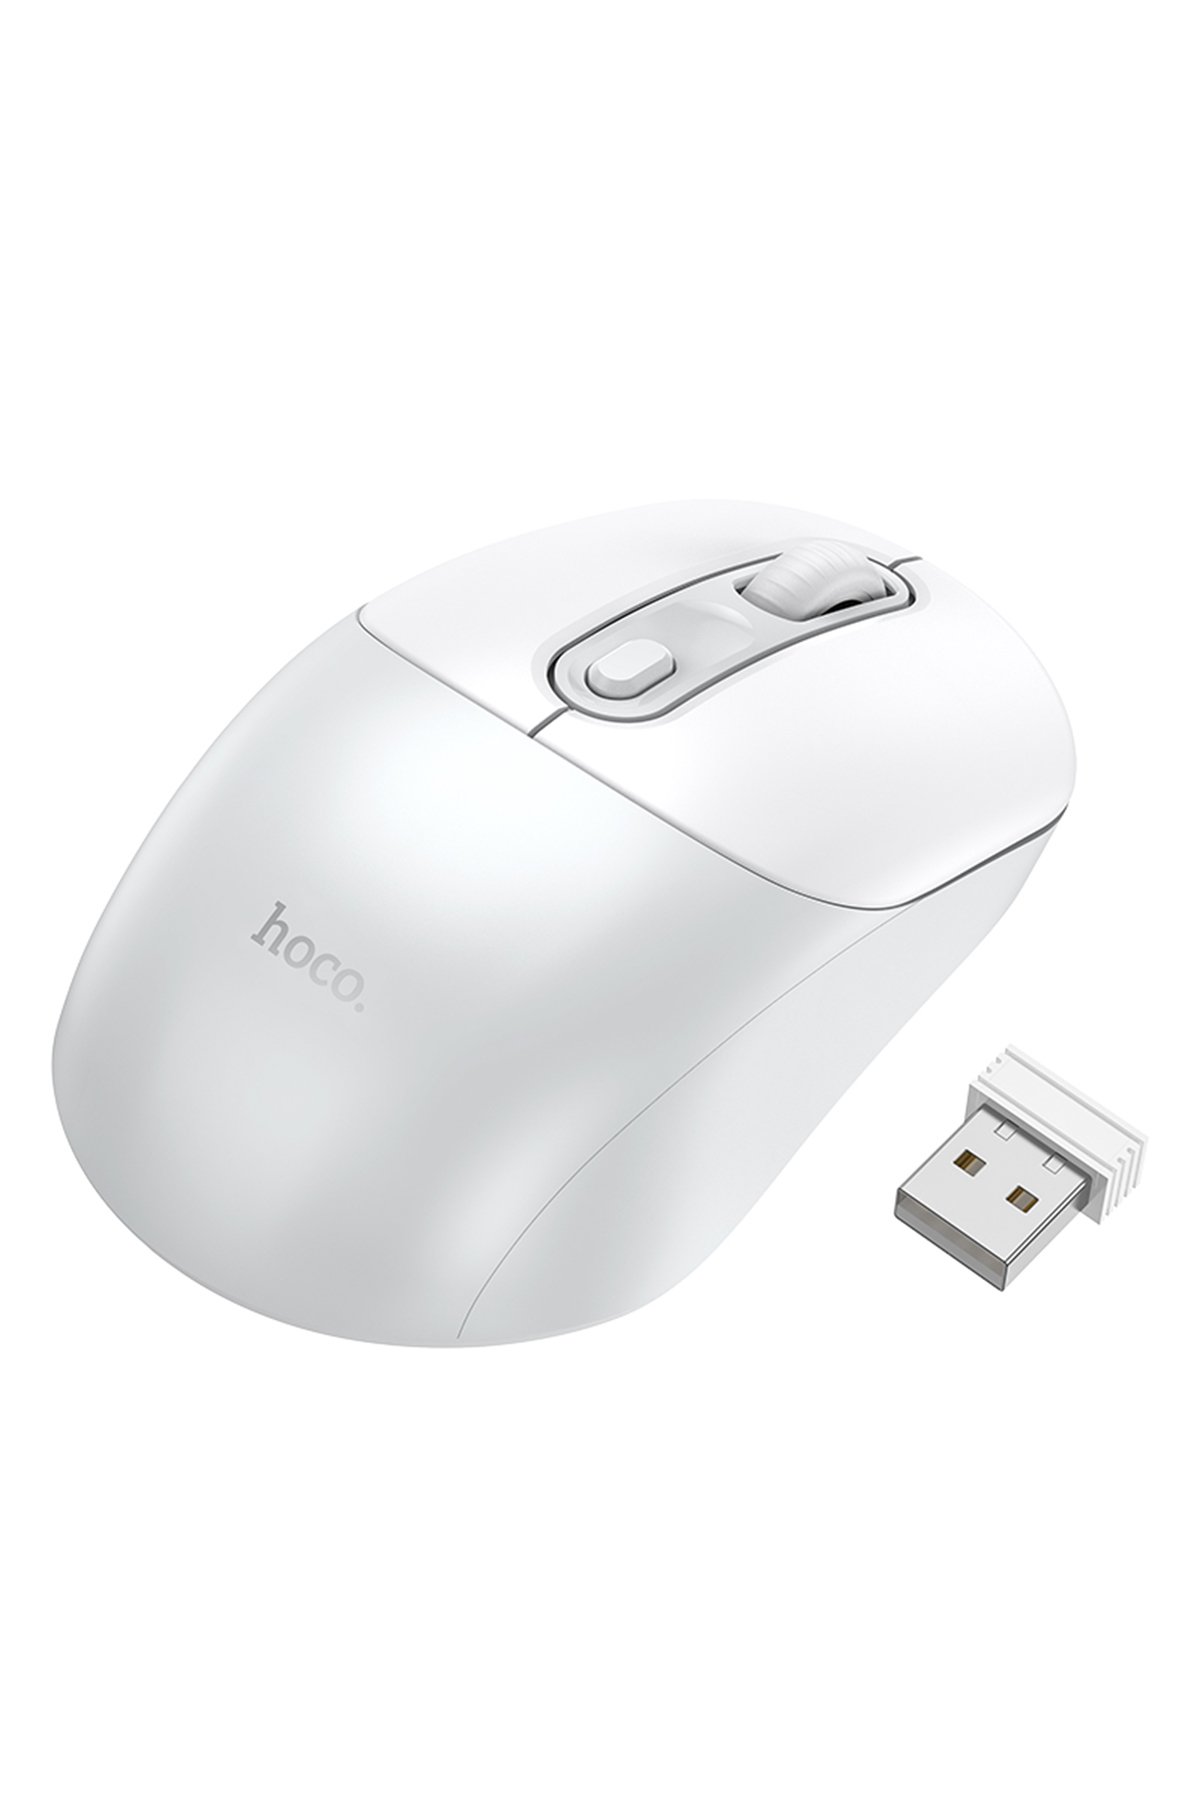 Hoco GM28 2.4G Business Kablosuz Mouse - Siyah-Gri